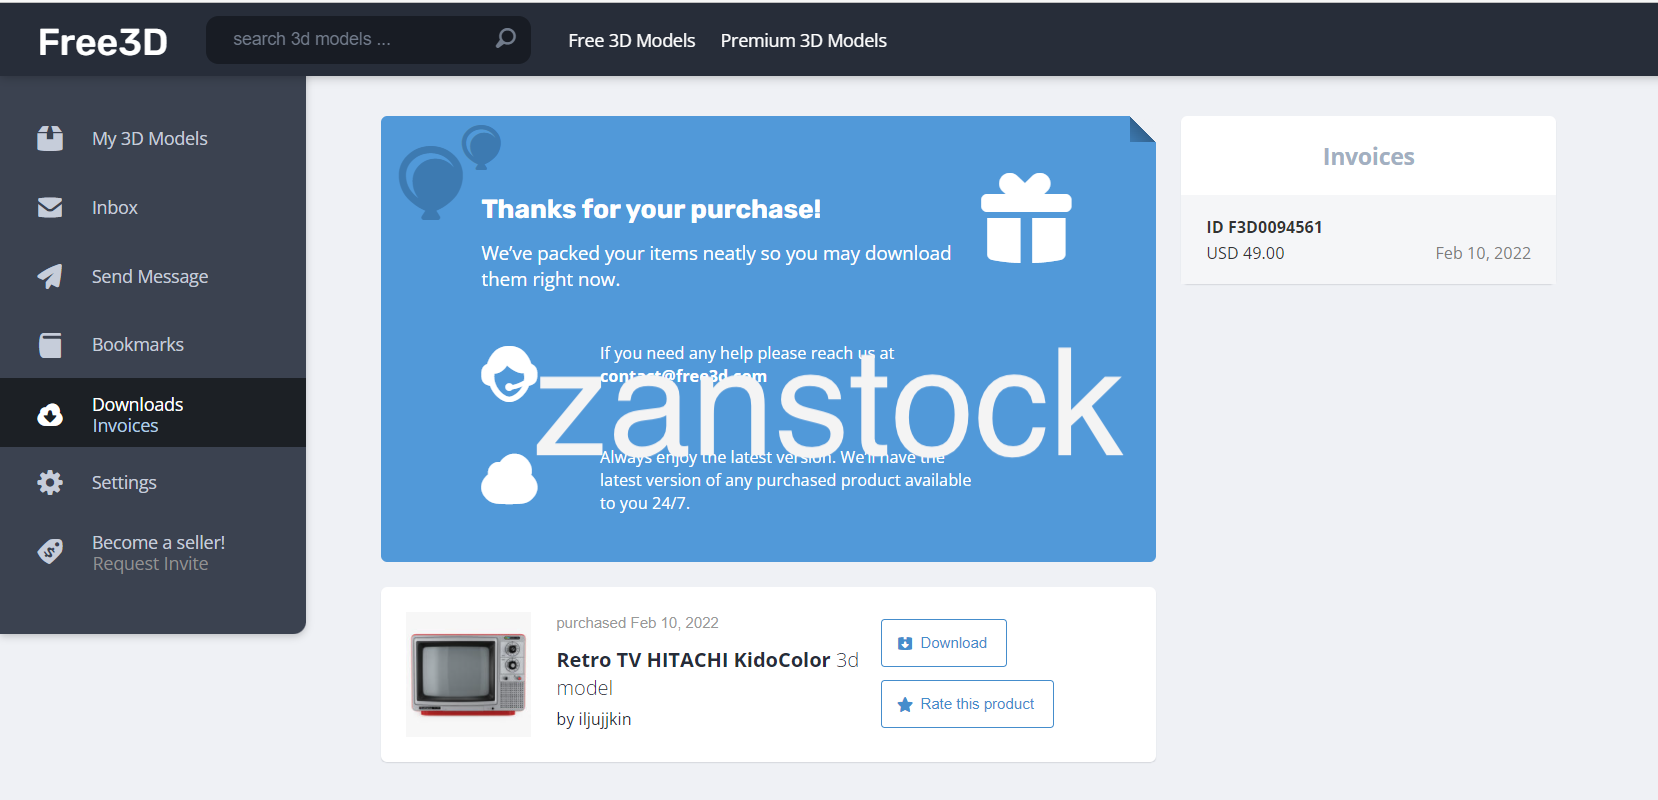 mua model 3d free3d 3 - Zan Stock